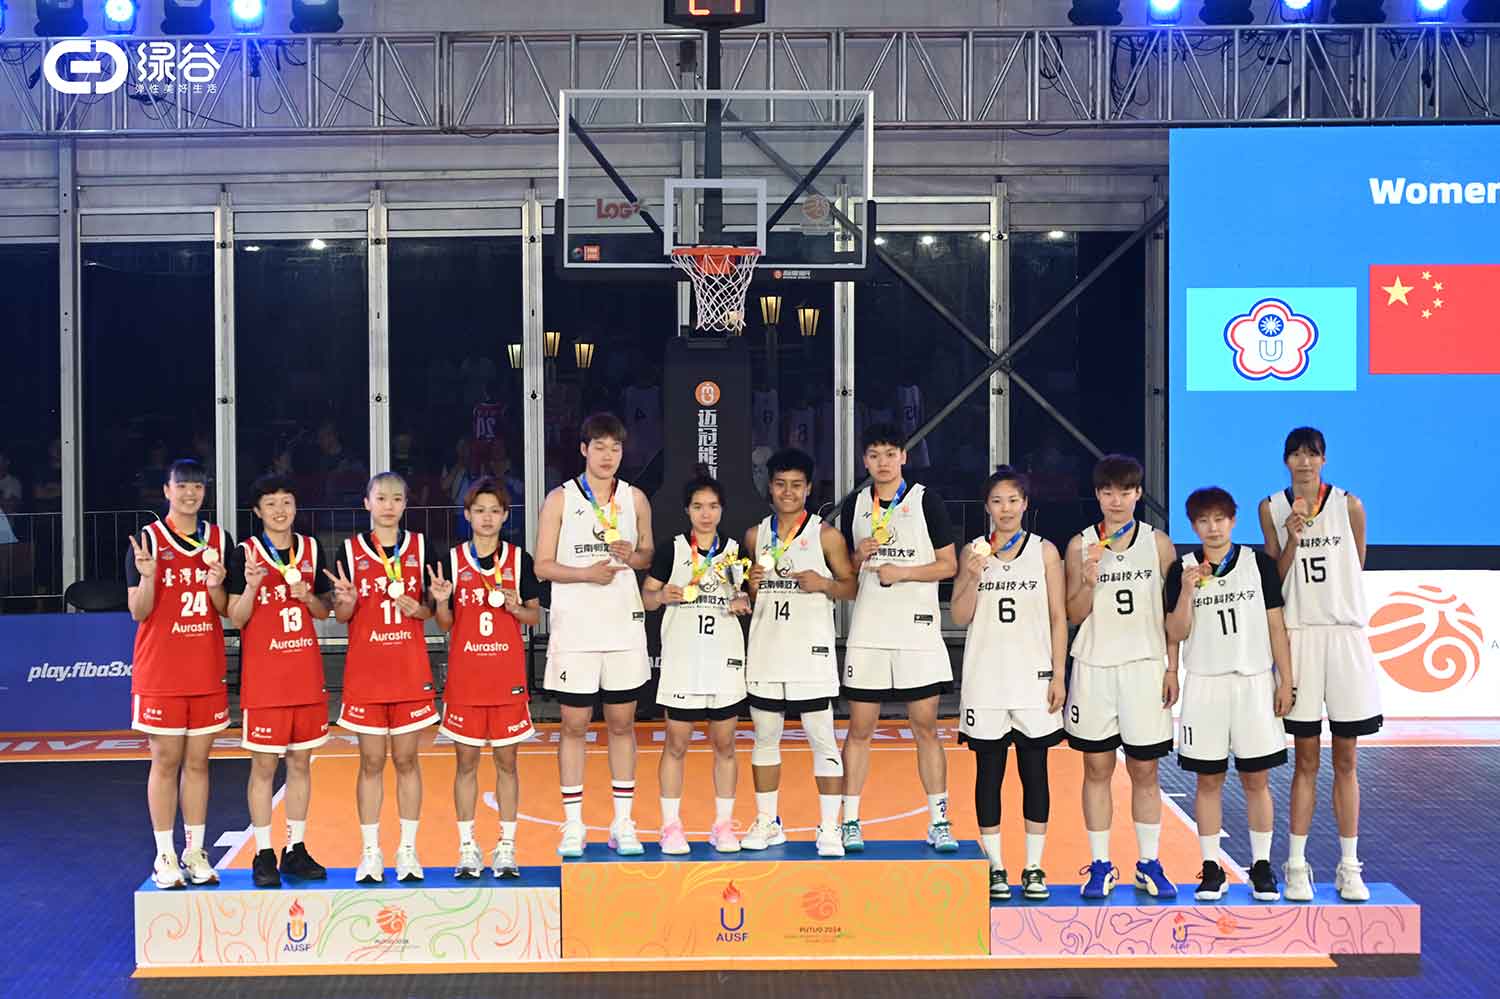 Official flooring partner brand | Witness the peak showdown of the Asian University 3x3 Basketball Championship